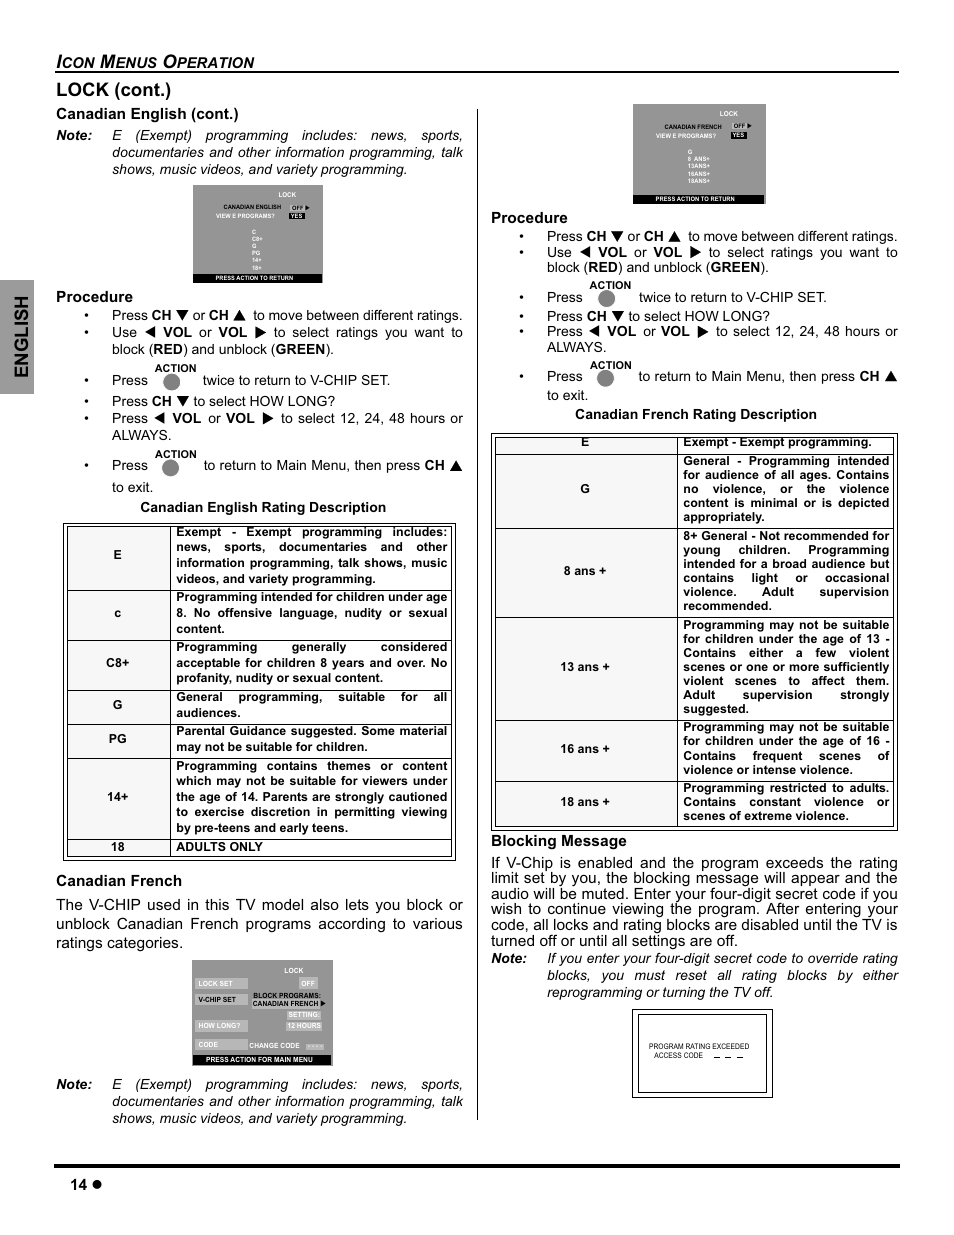 English lock (cont.) | Panasonic CT-32HC15 Manuel d'utilisation | Page 16 / 56